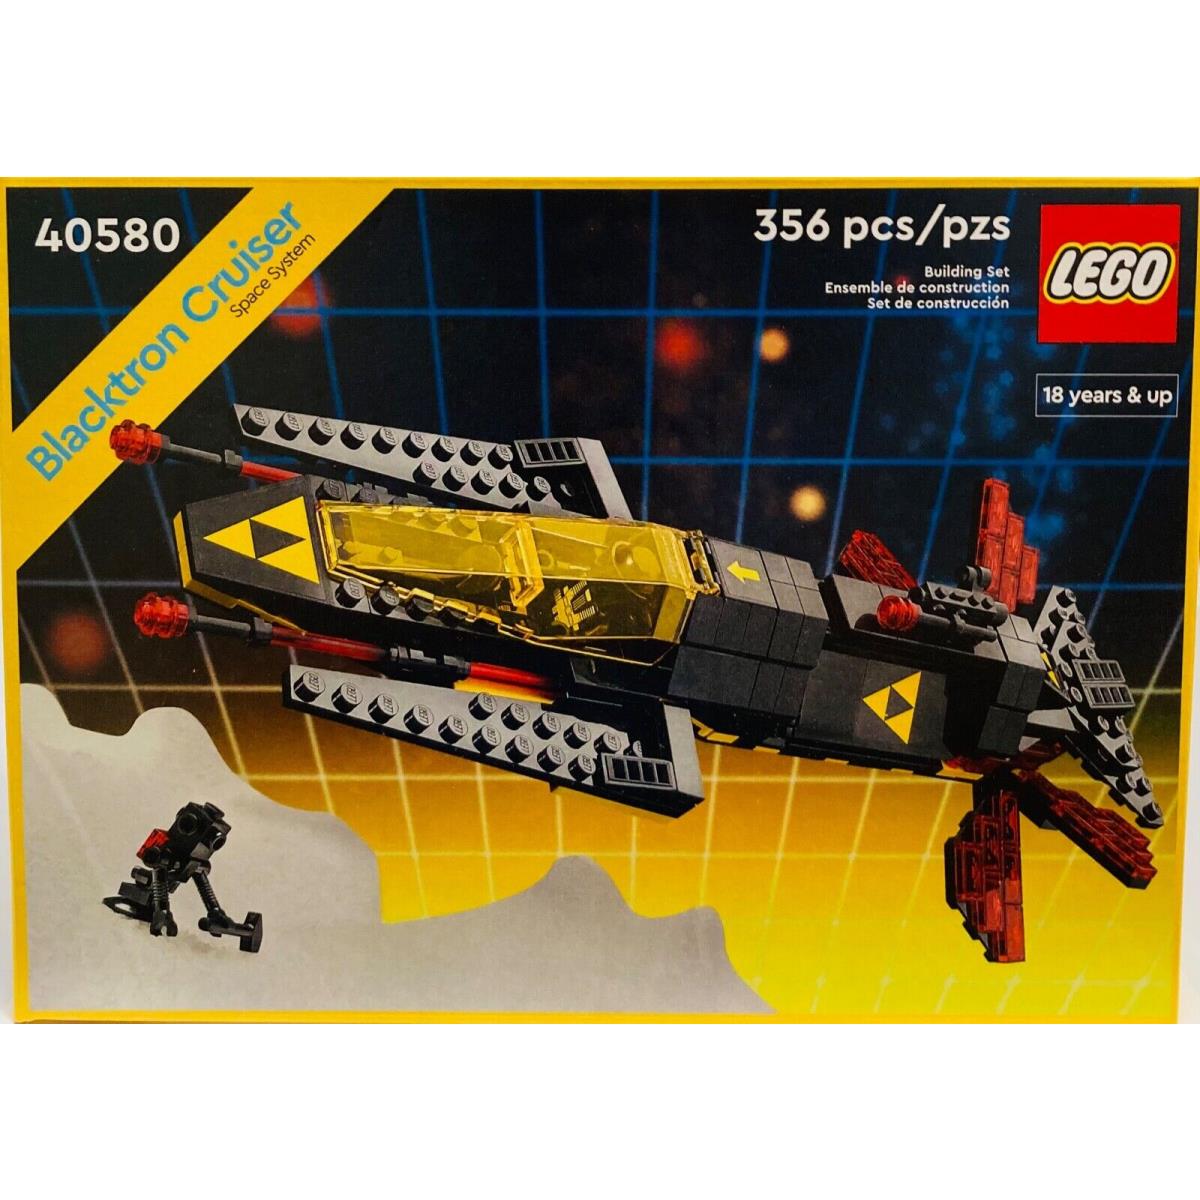 Lego Blacktron Cruiser Space System 40580 Building Kit Toy Set 356 Pieces